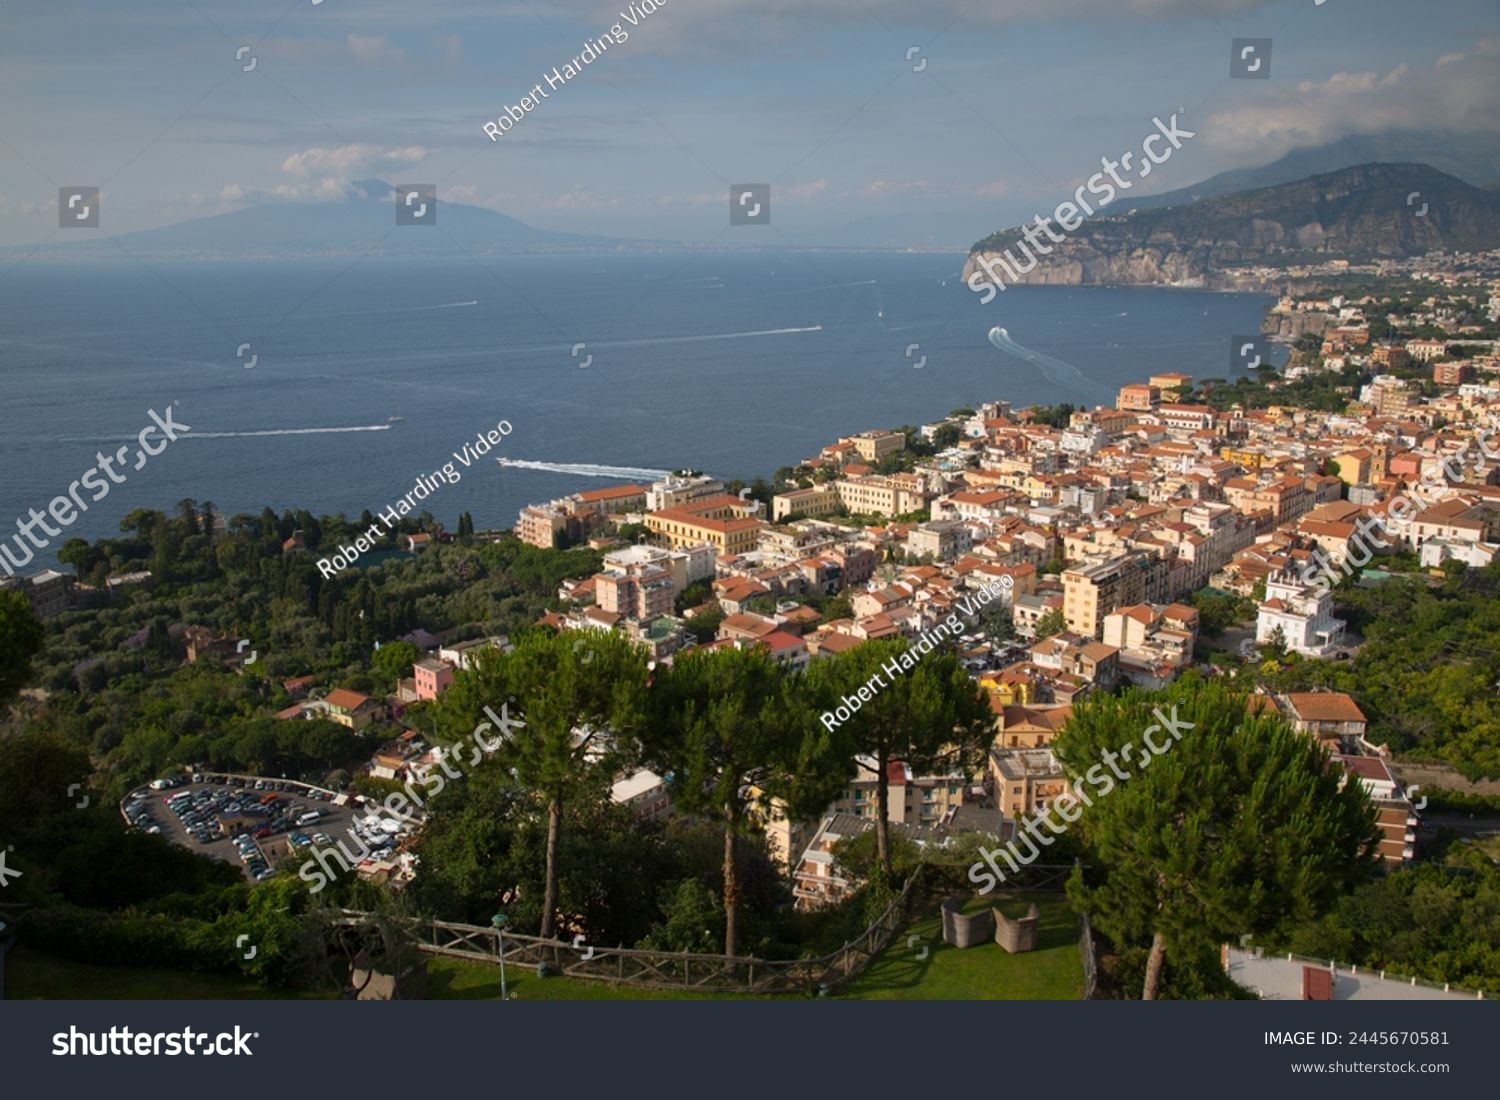 View of Vesuvio and Terrheinian Sea from above Sorrento, Costiera Amalfitana (Amalfi Coast), UNESCO World Heritage Site, Campania, Italy, Europe #2445670581